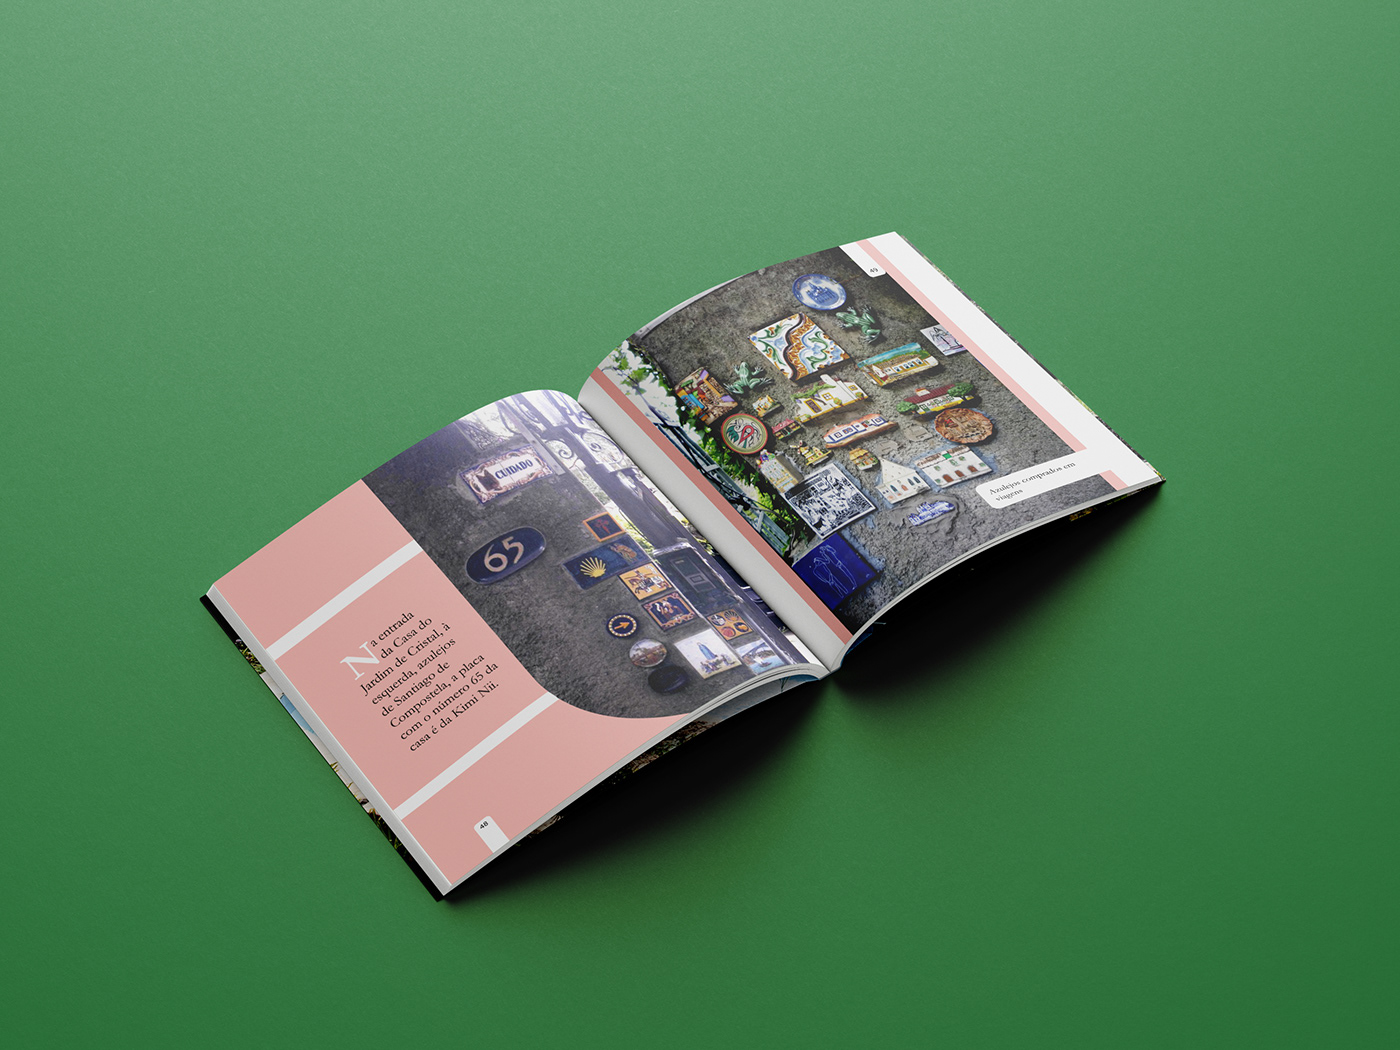 projeto gráfico diagramação design gráfico Livro design editorial book InDesign diagramação de livro LIVROS editorial